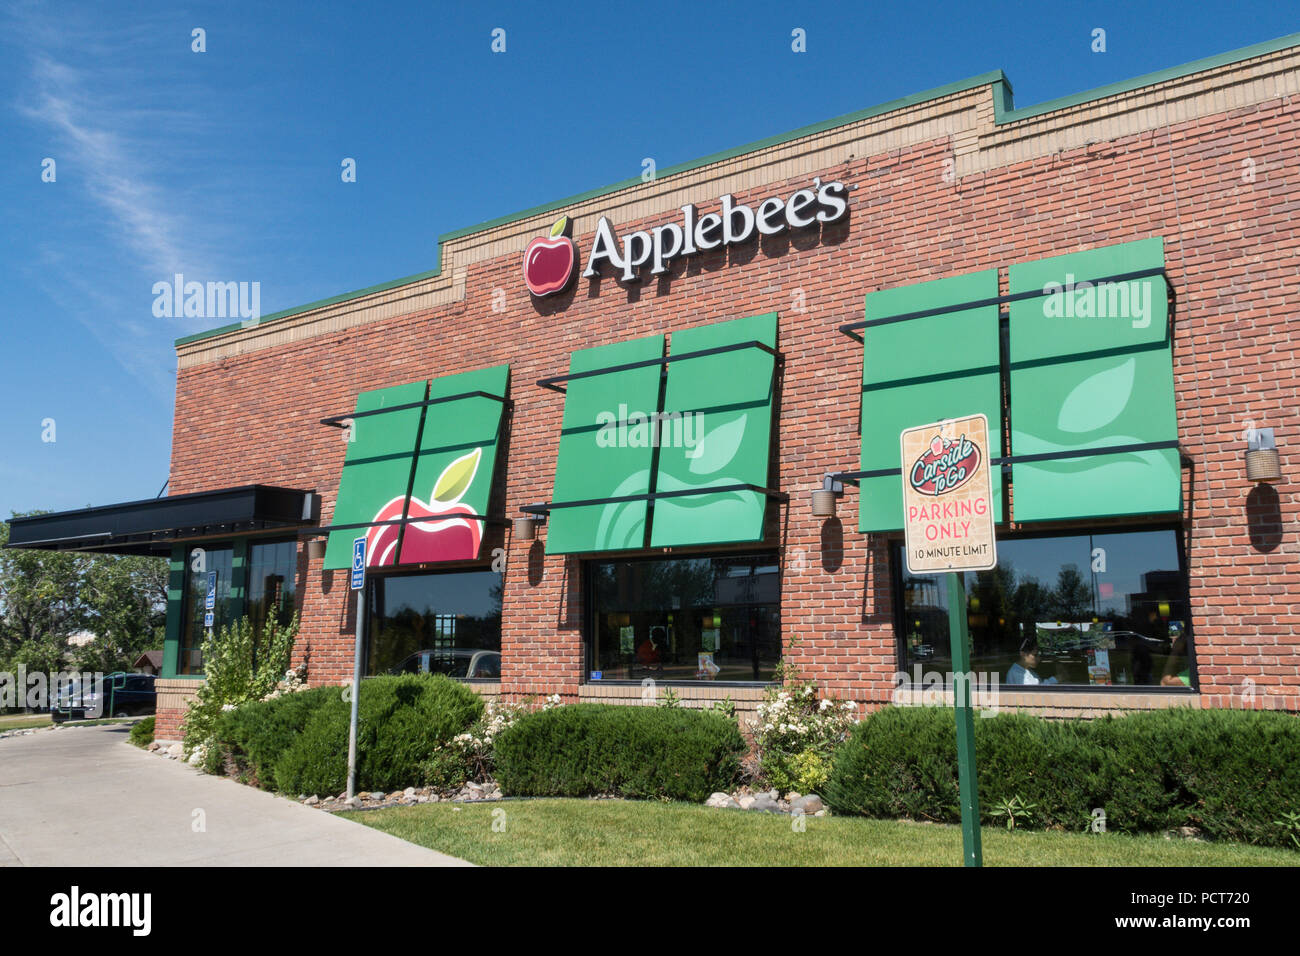 Applebee's Restaurant Exterior in Great Falls, Montana, USA Stock Photo